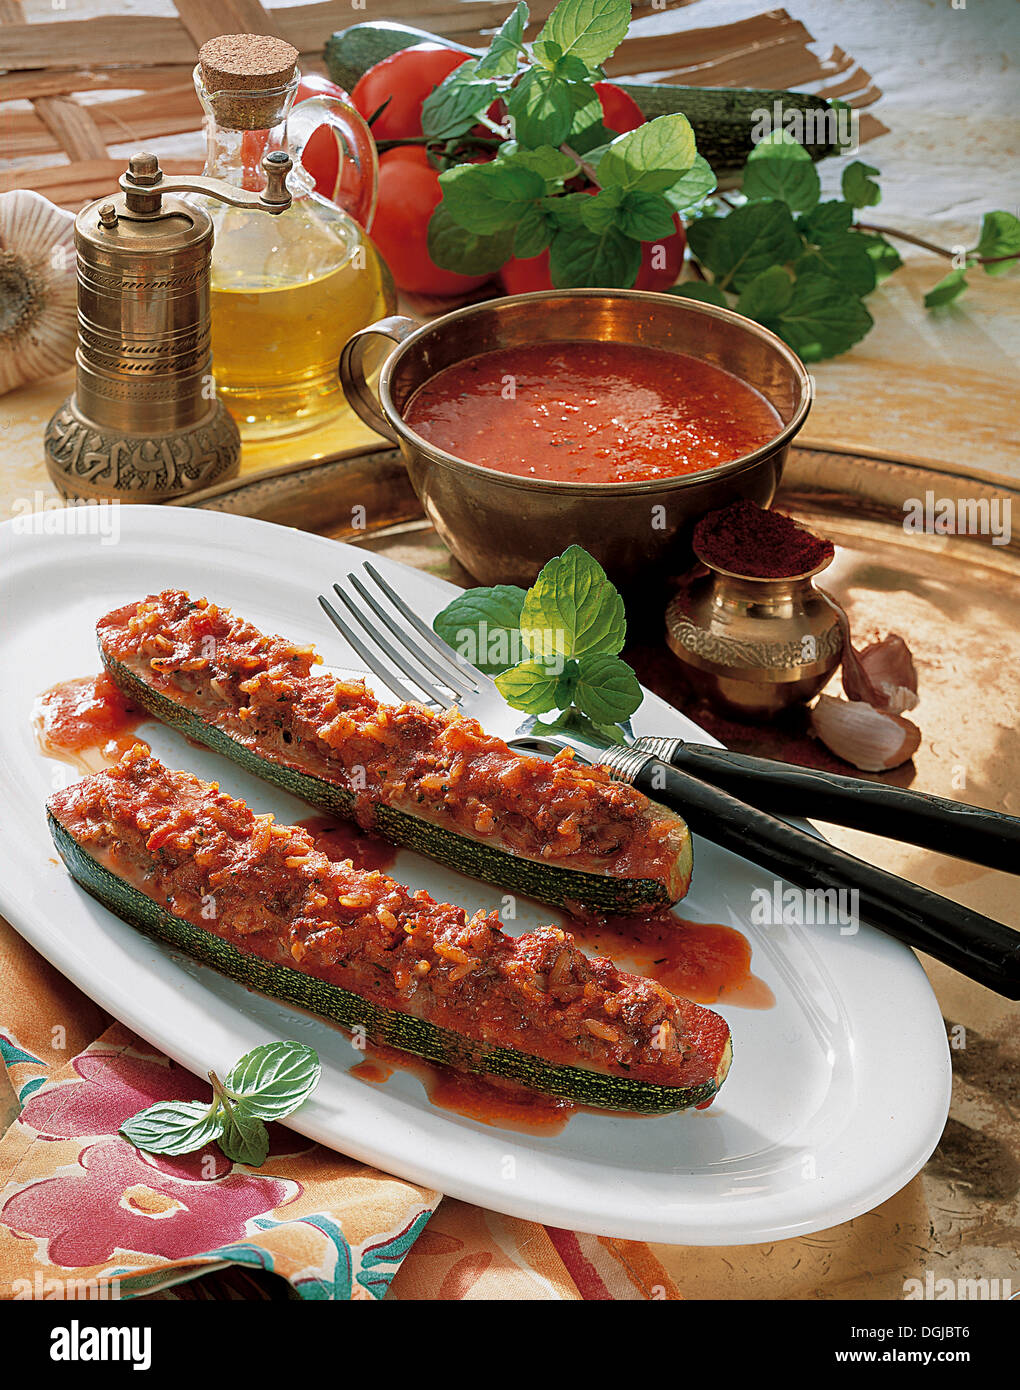 Courgetts in tomato sauce, Tunisia. Stock Photo